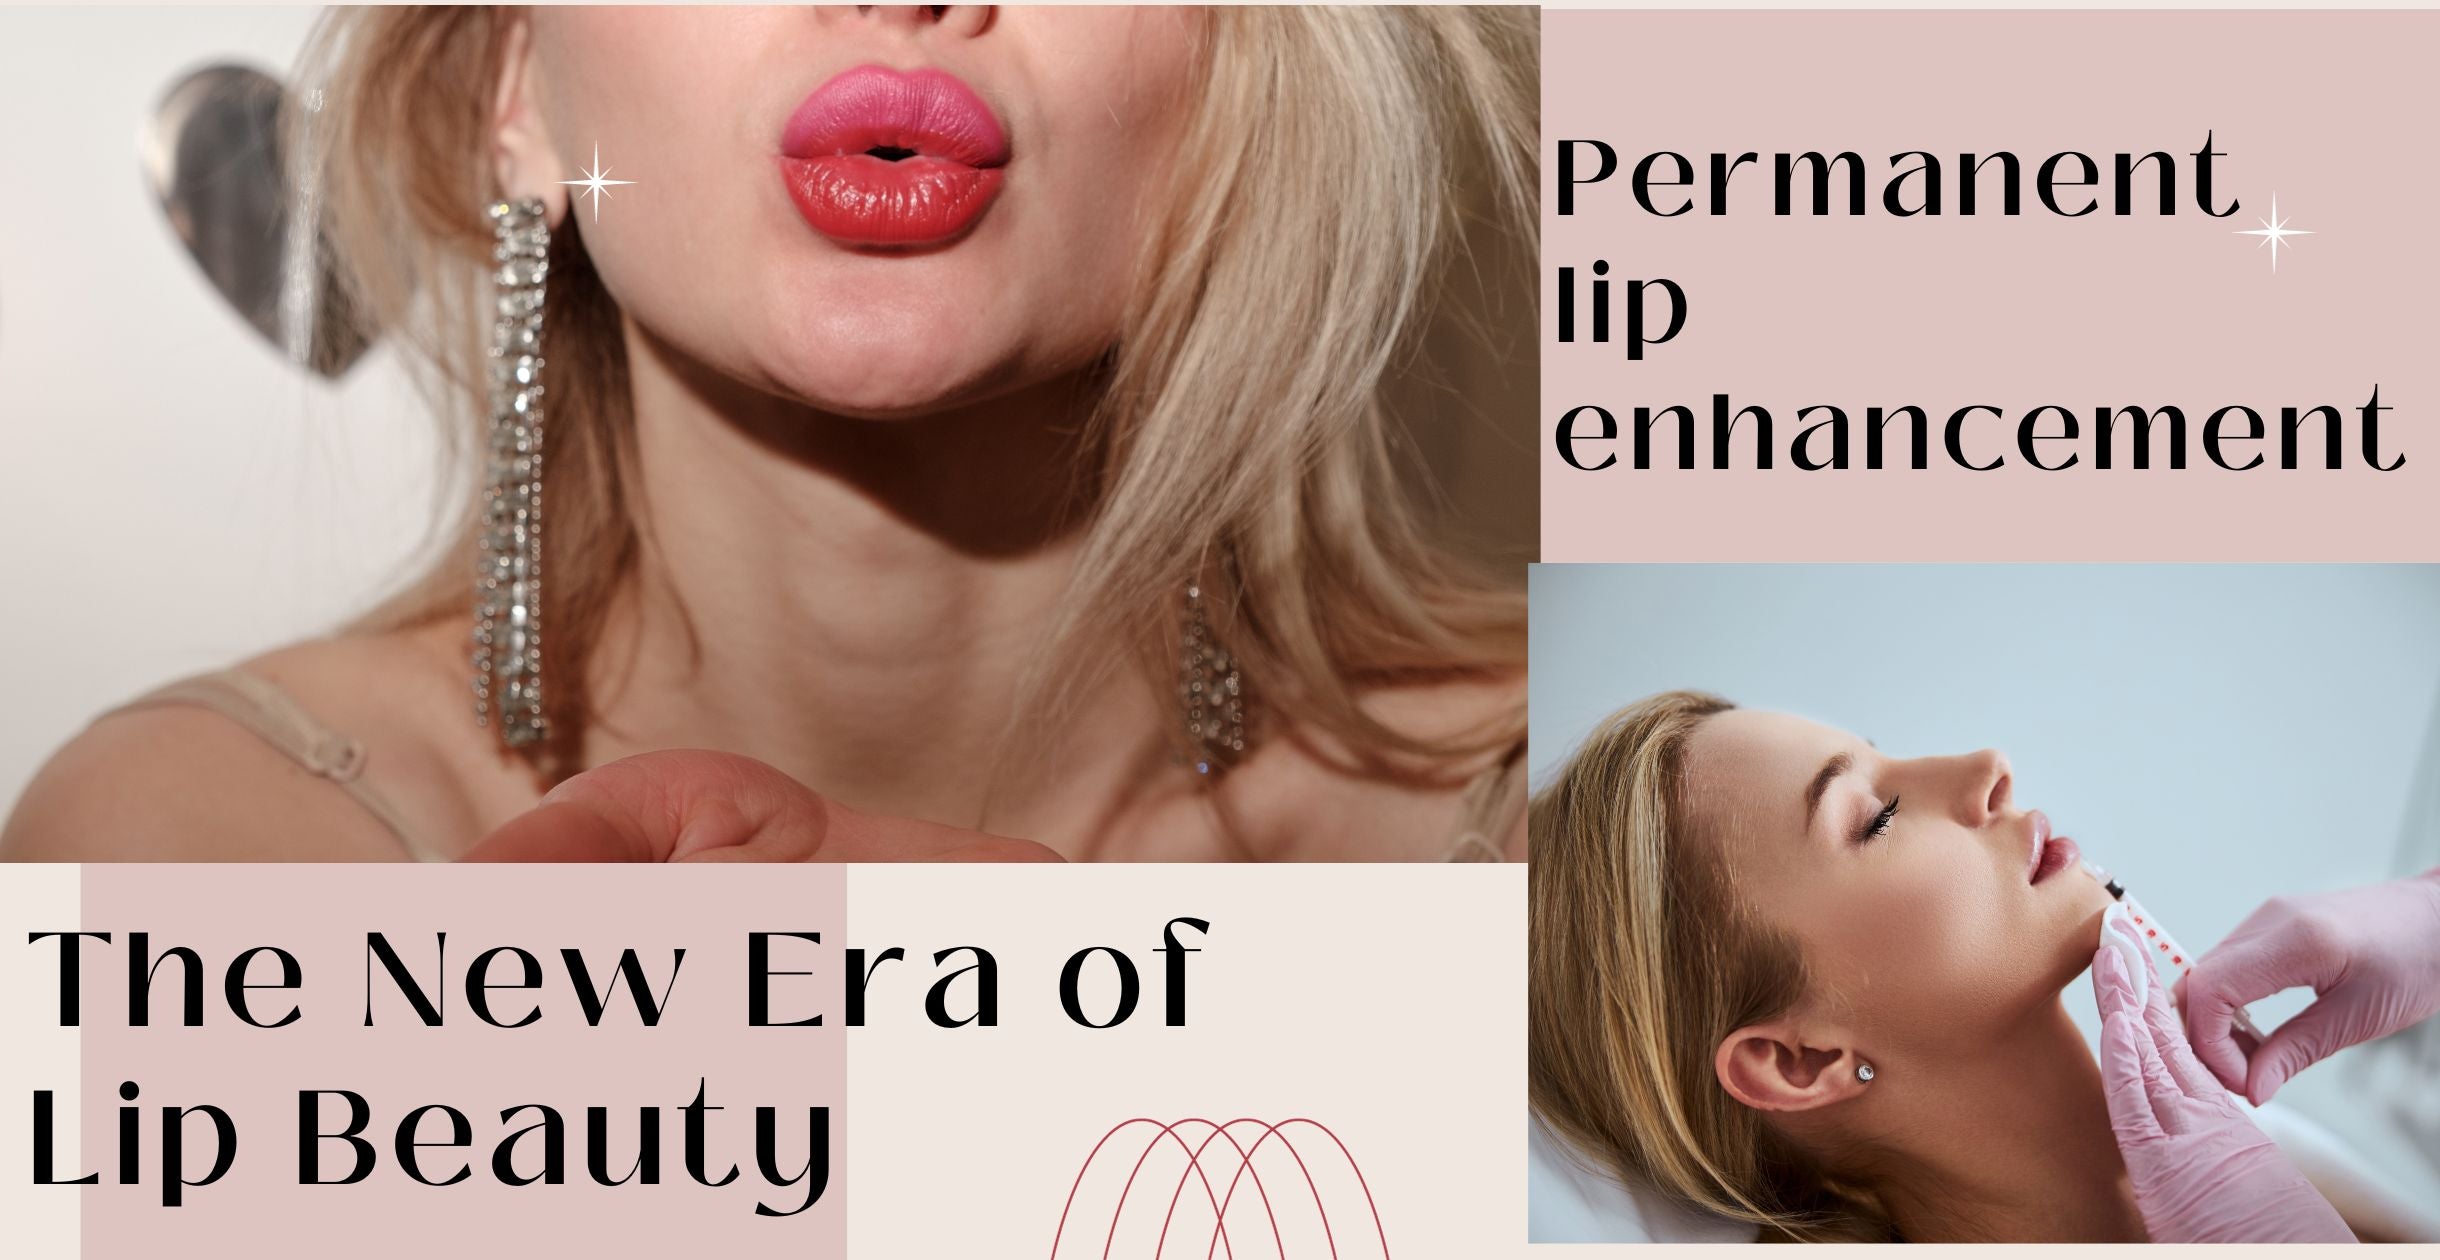 Permanent lip enhancement: The New Era of Lip Beauty